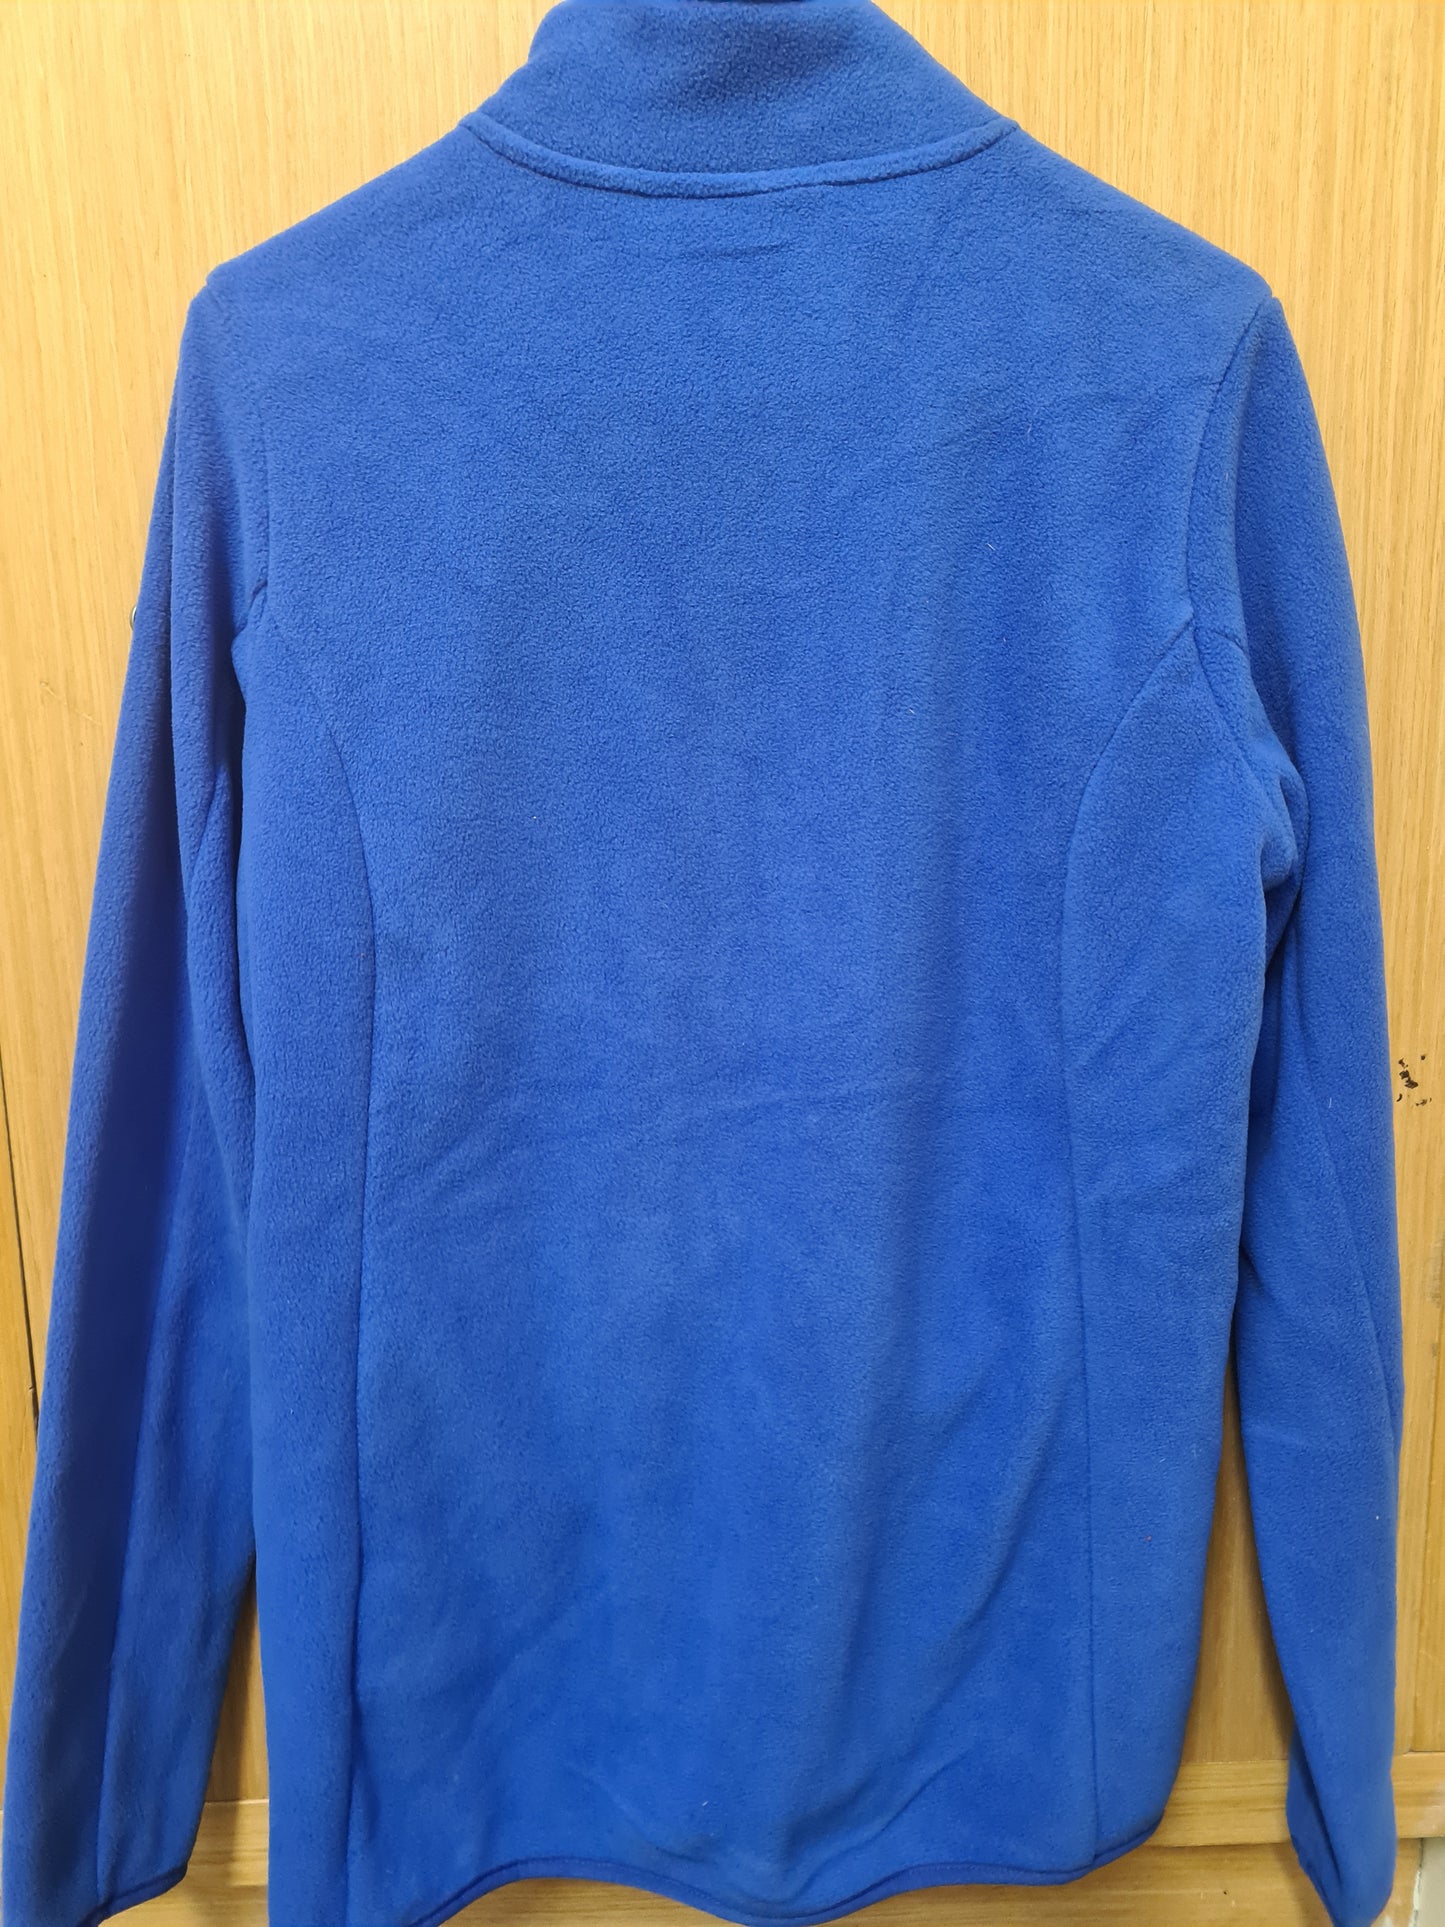 NEW hkm fleece jacket, royal blue, sizes L & XL FREE POSTAGE 🟢